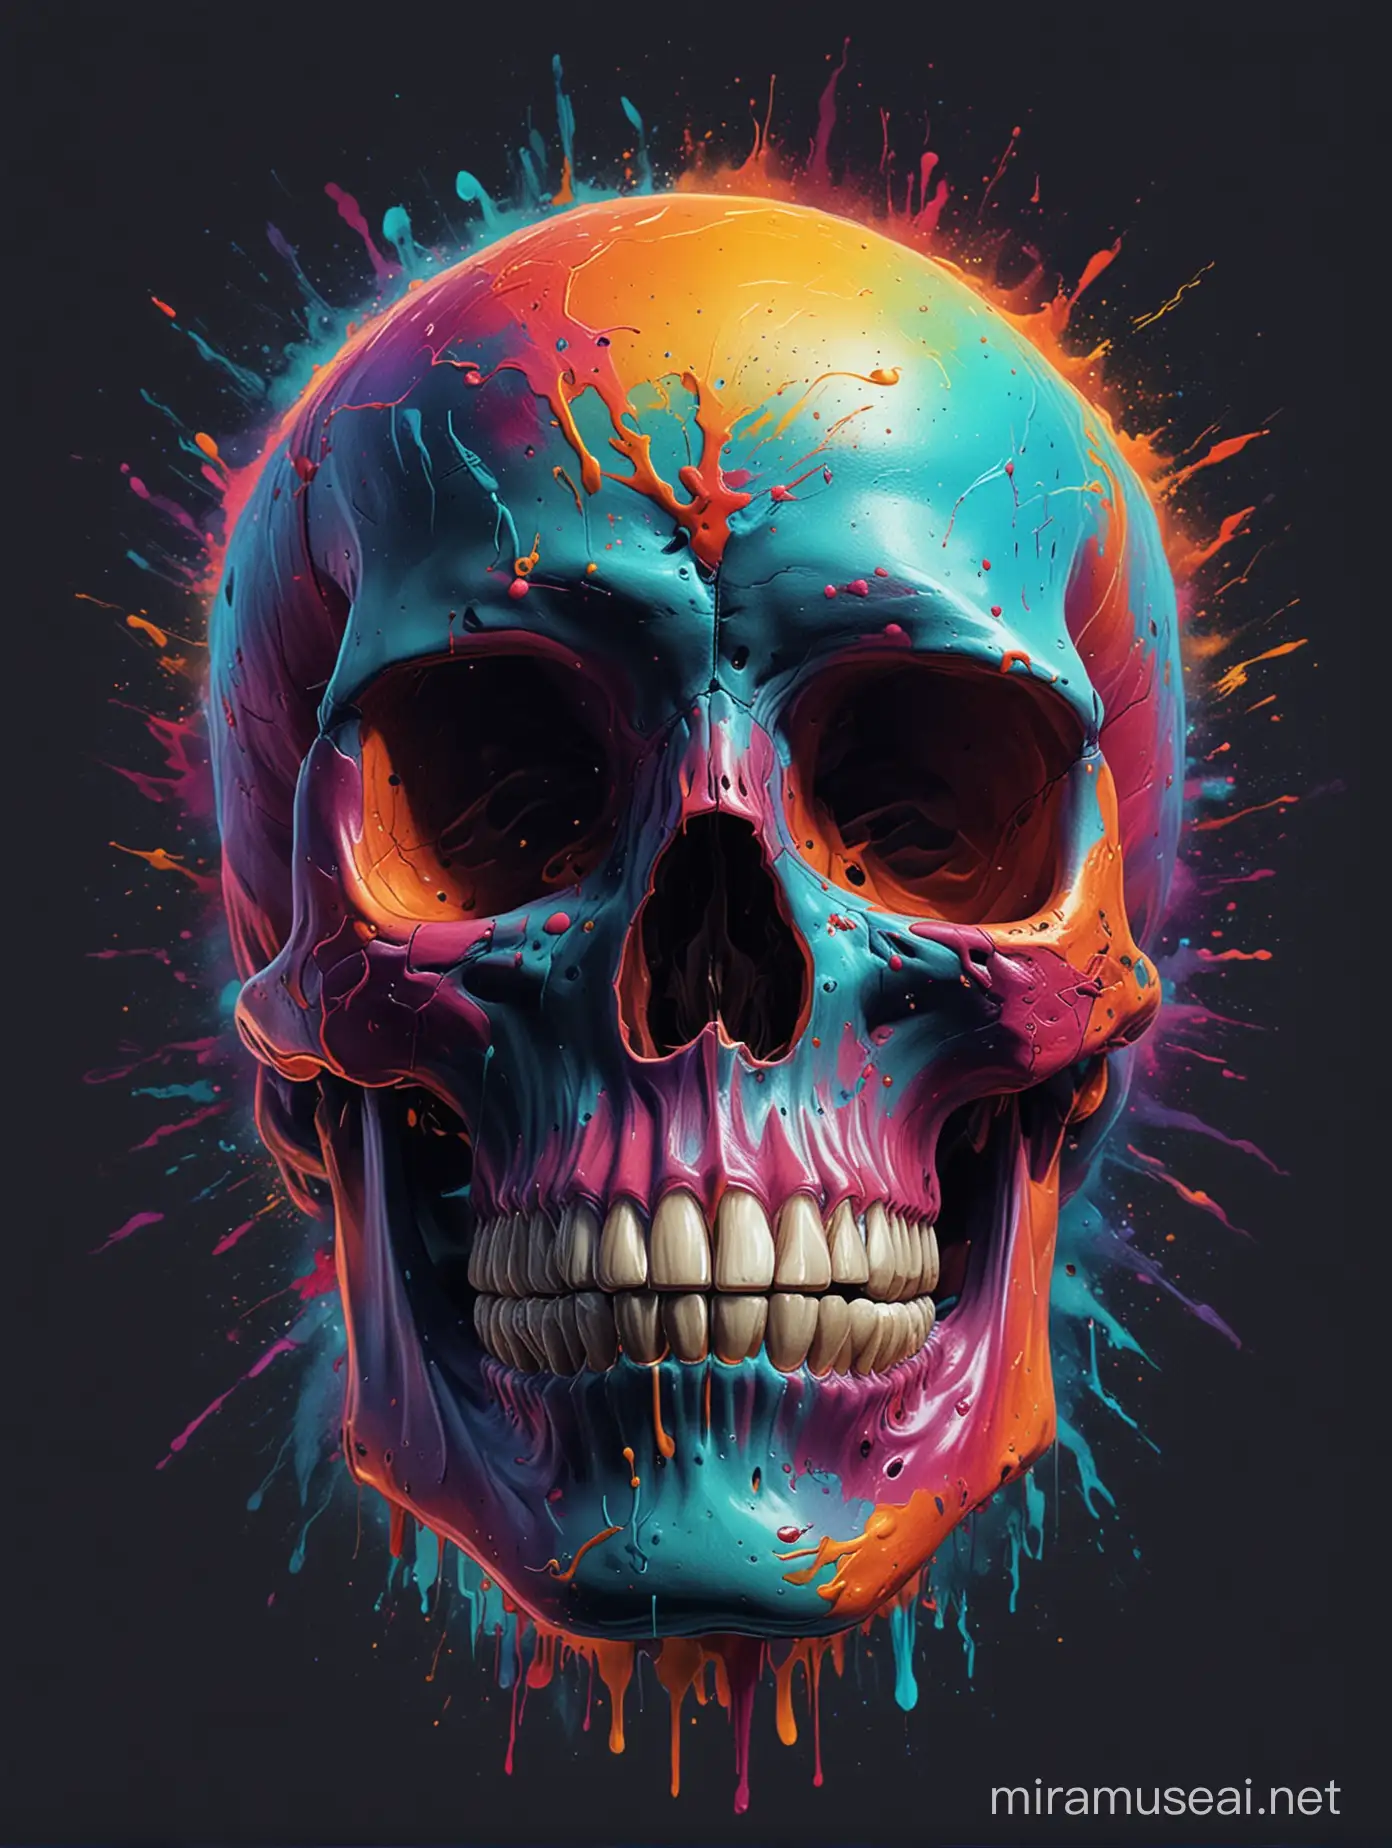 Colorful Skull Artwork Vibrant Dia de los Muertos Inspired Illustration